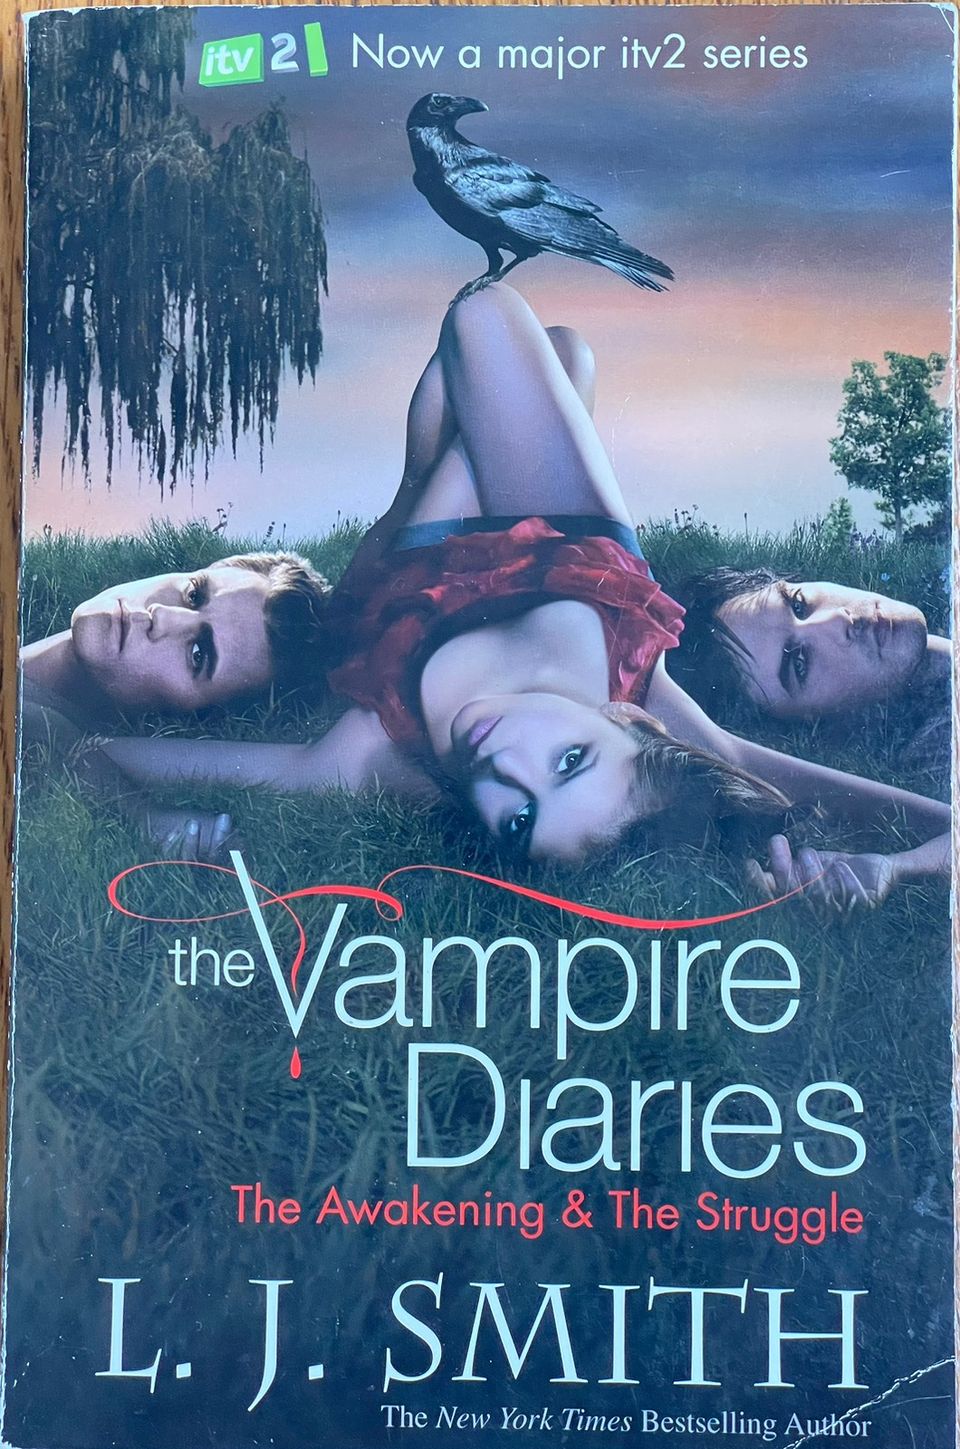 the Vampire Diaries The Awakening & The Struggle L. J. SMITH